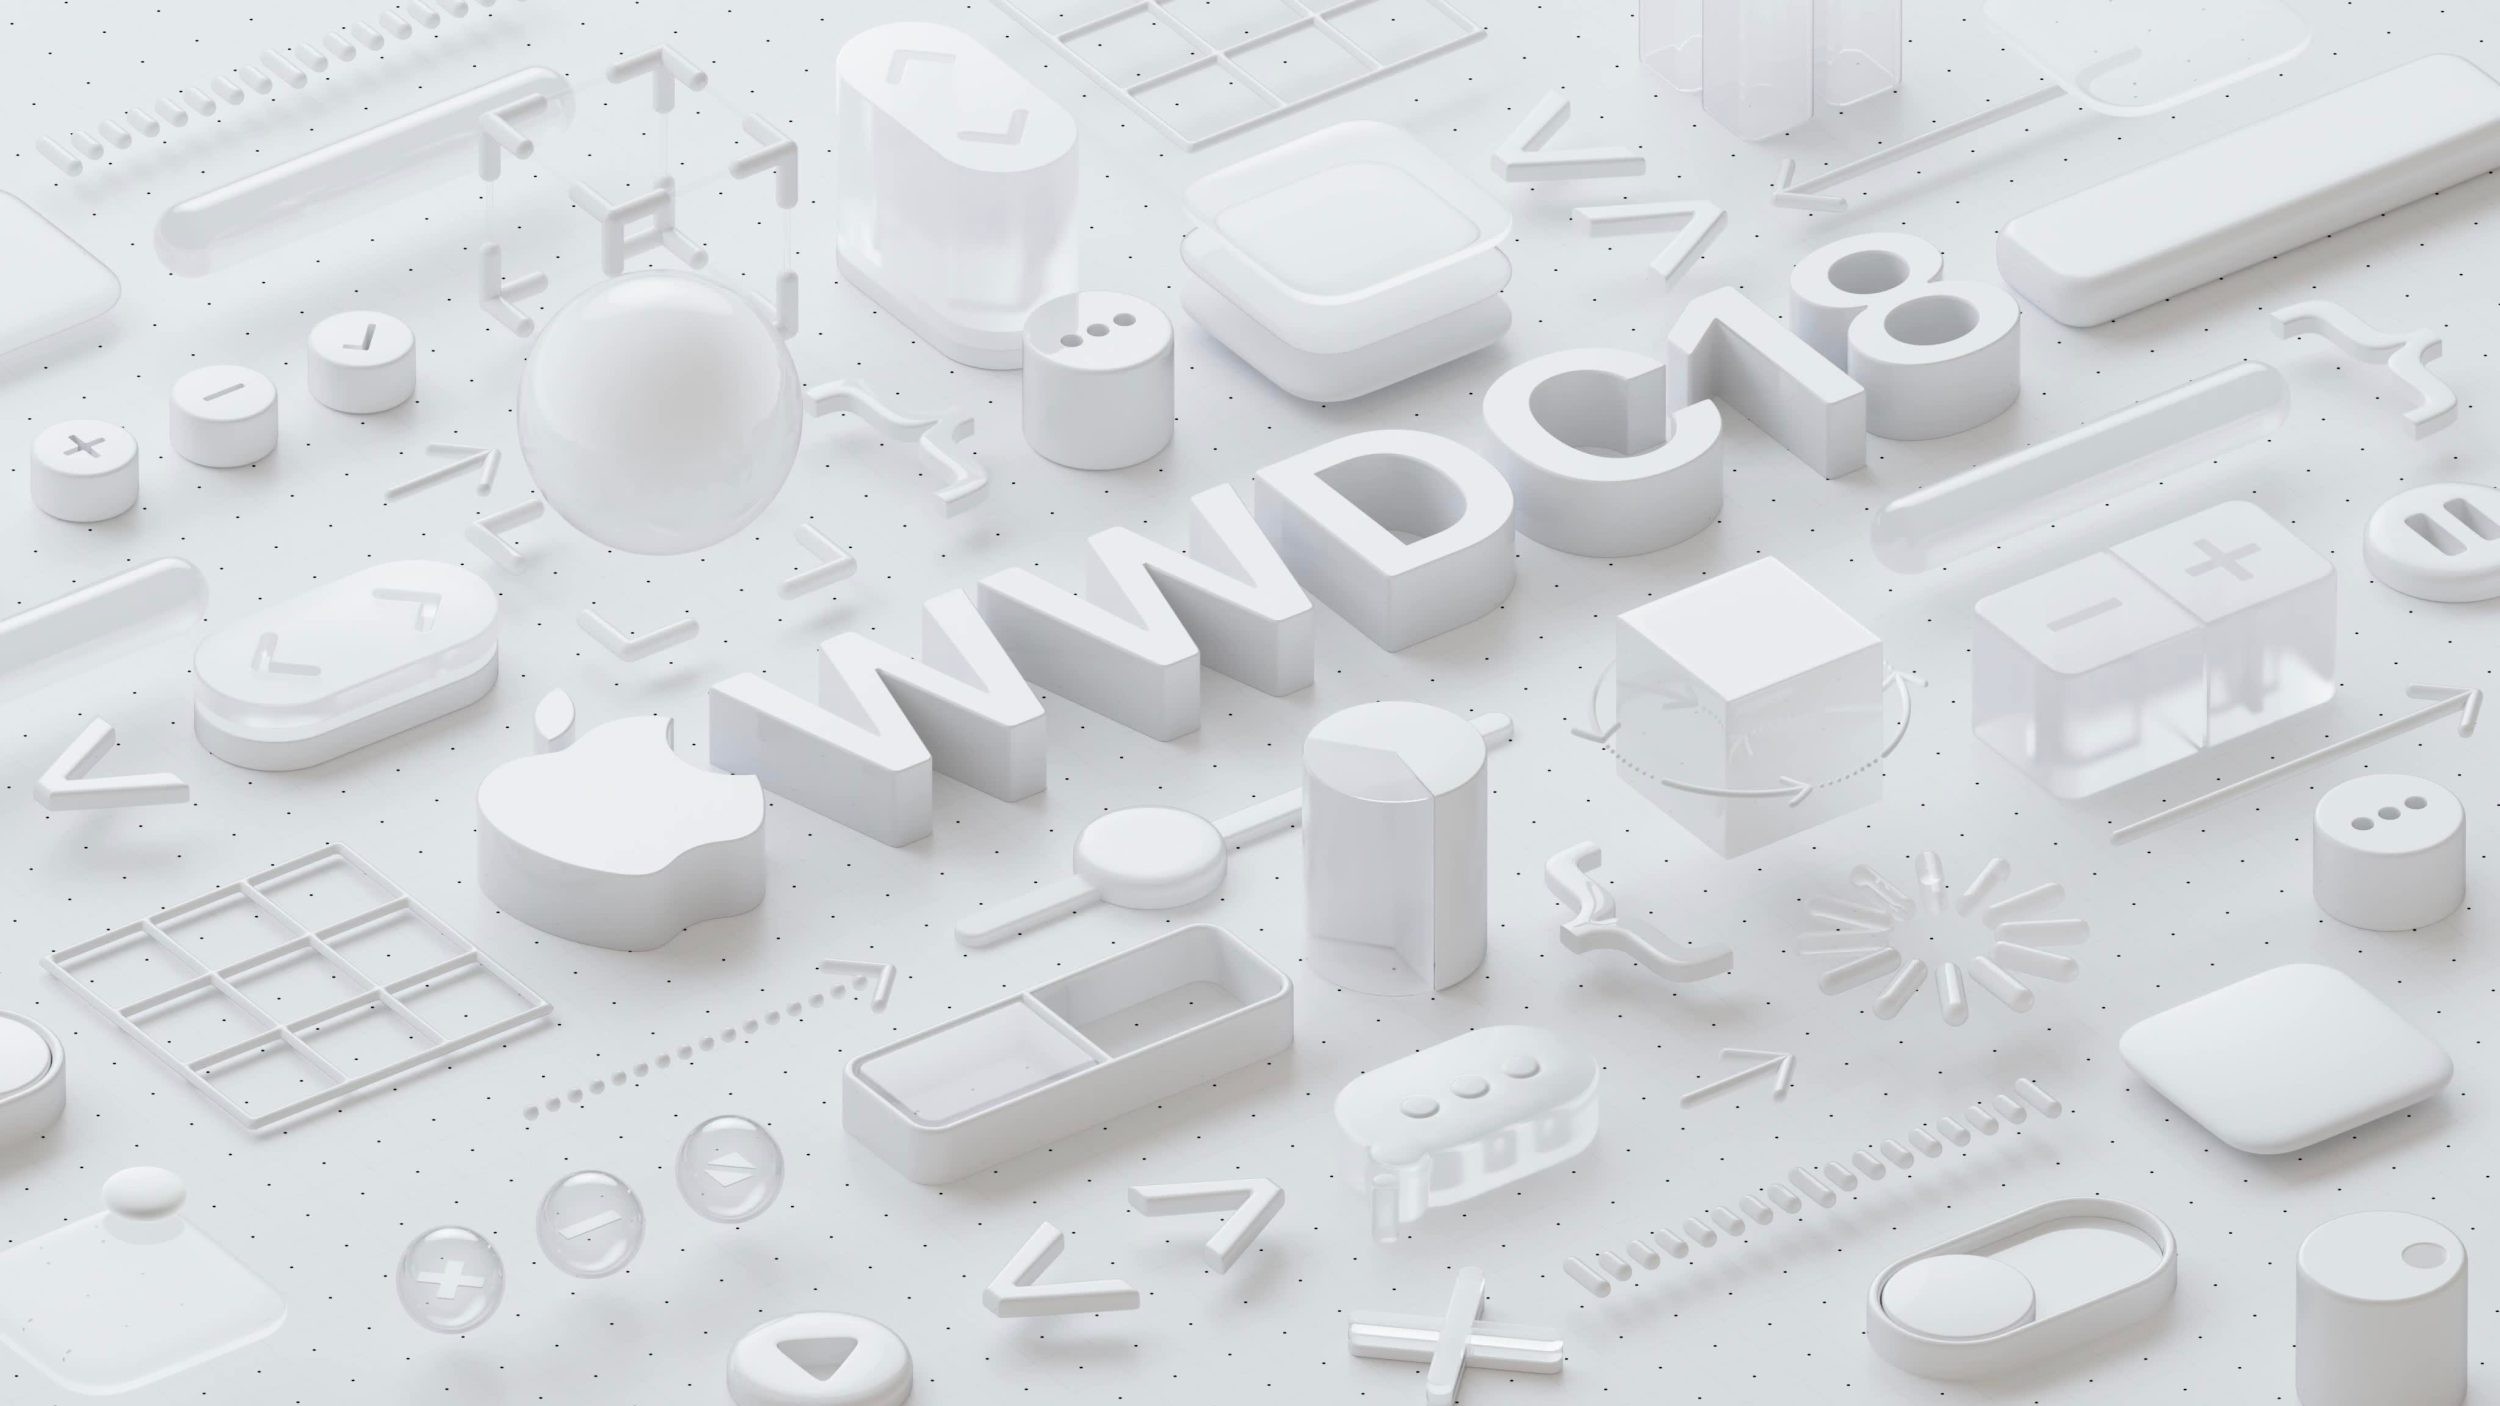 WWDC 2018 пройдёт с 4 по 8 июня в Сан-Хосе